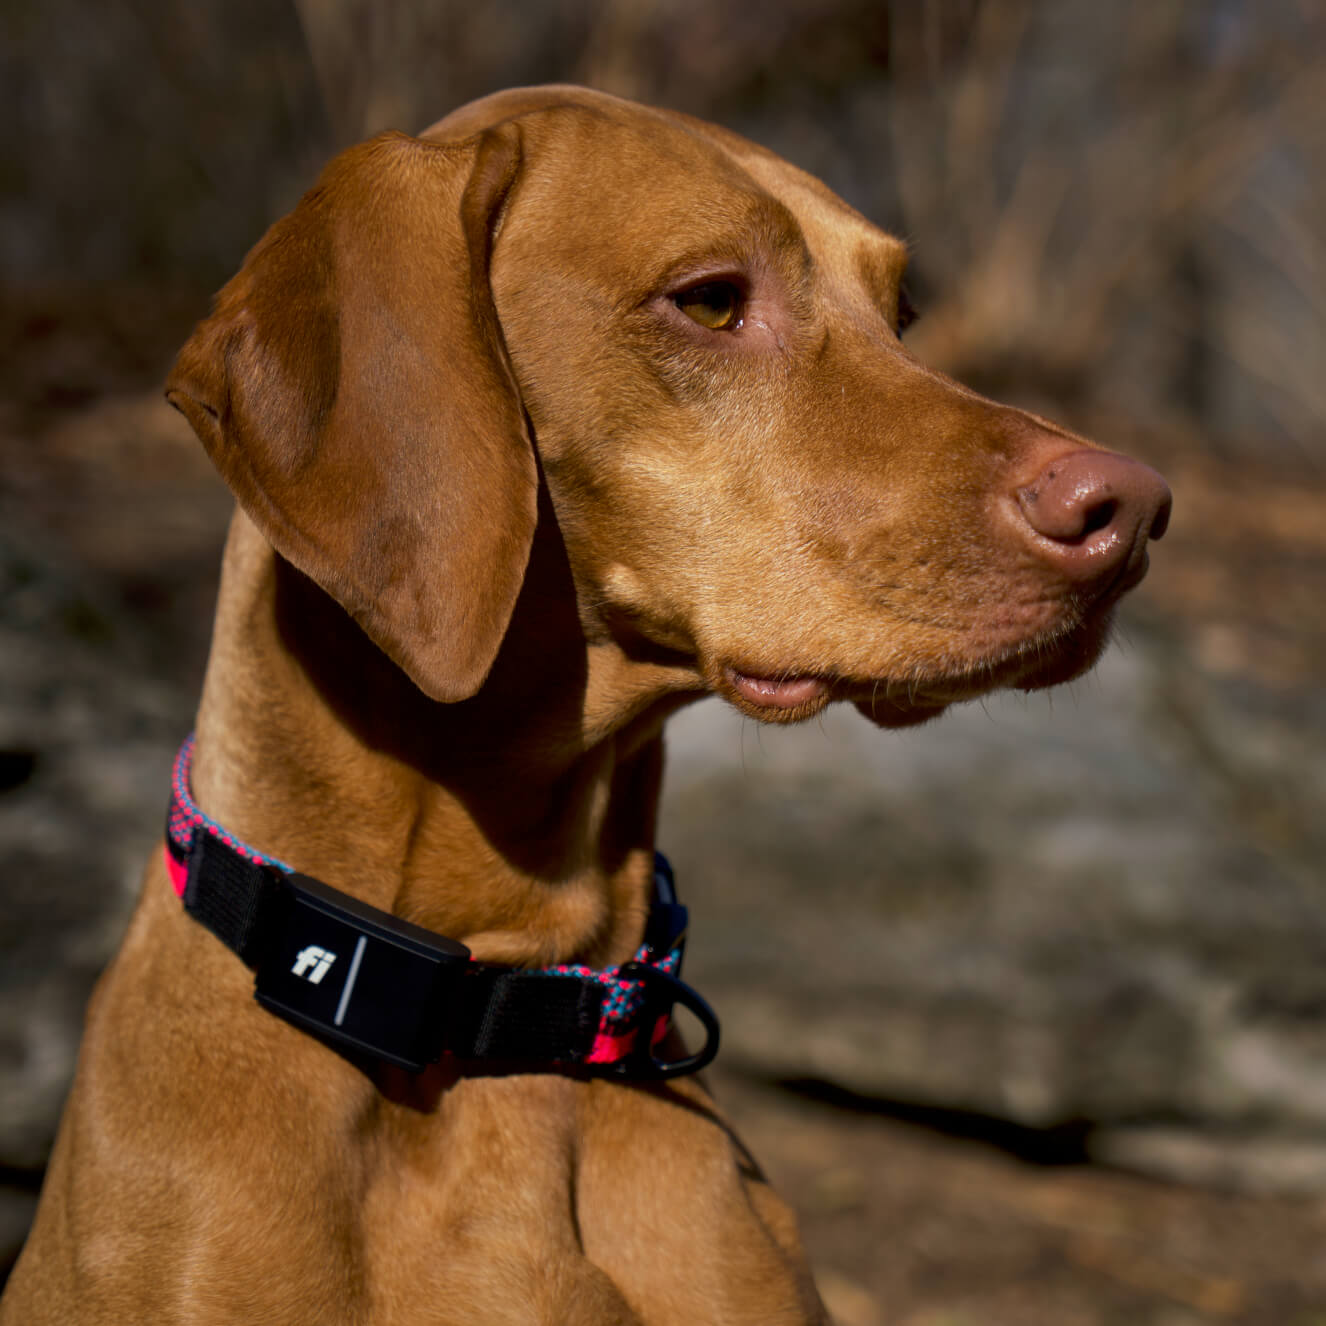 Green Dog Collar Geometric Dog Collar Pet Accessories 